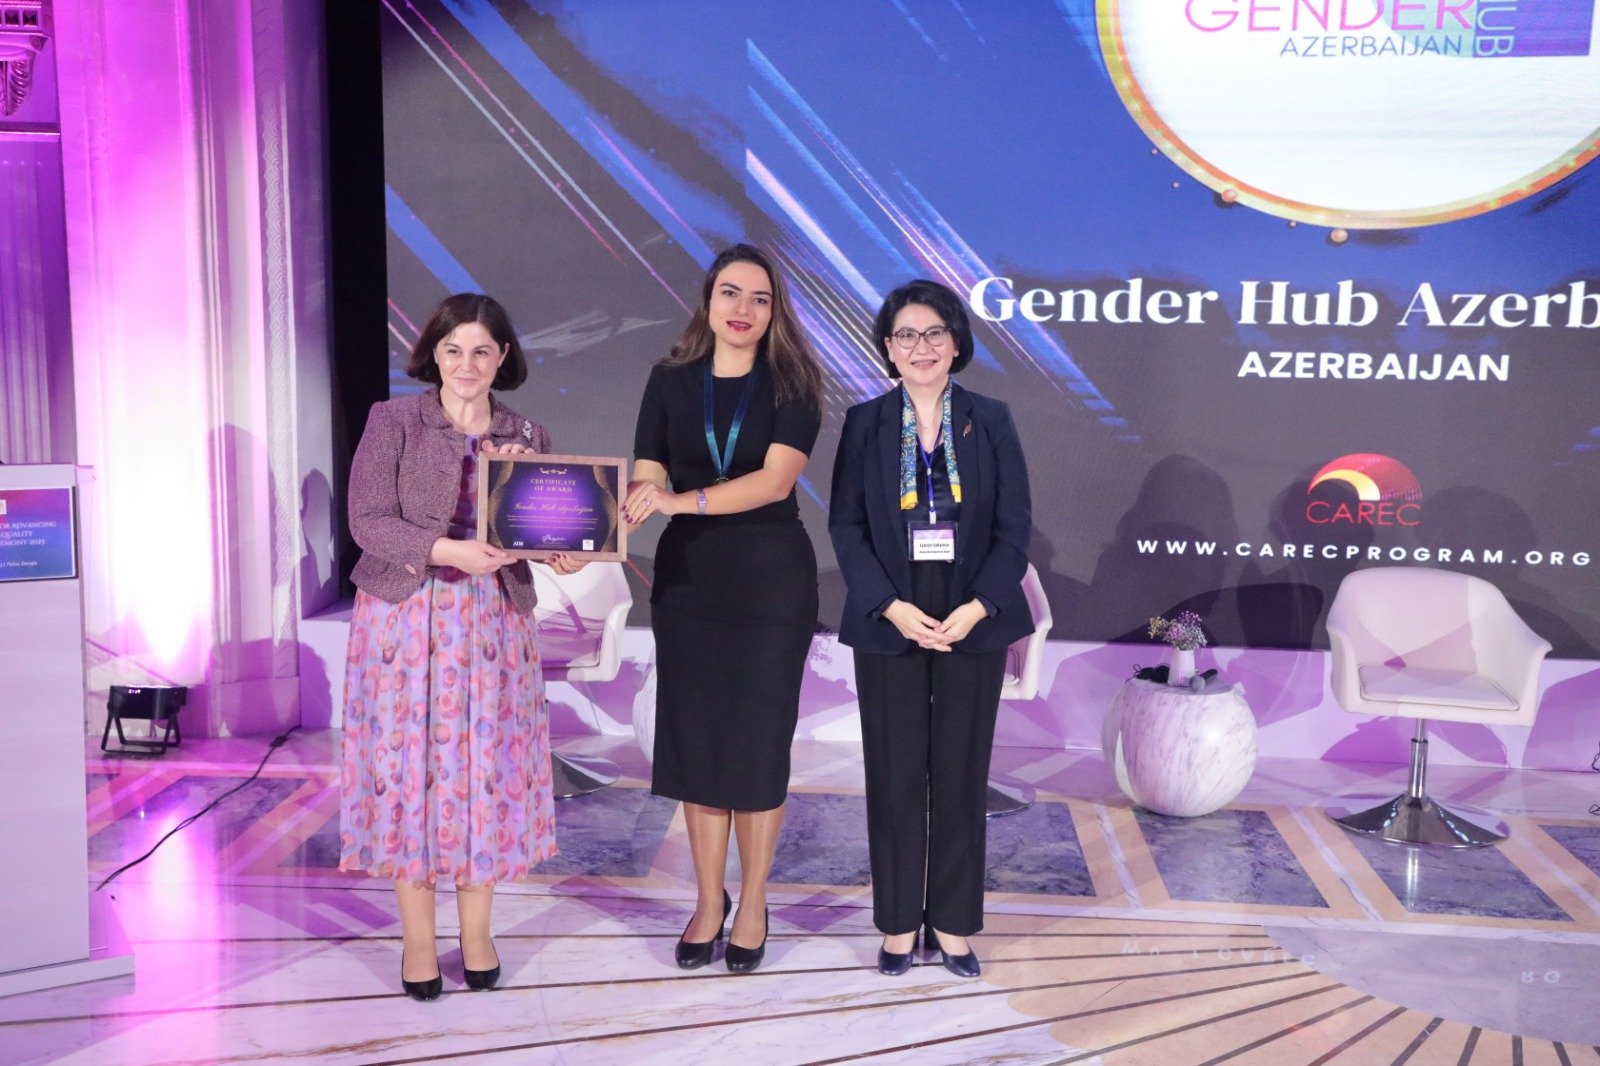 Организация Gender Hub Azerbaijan стала победителем премии CAREC по Гендерному Равенству (ФОТО)